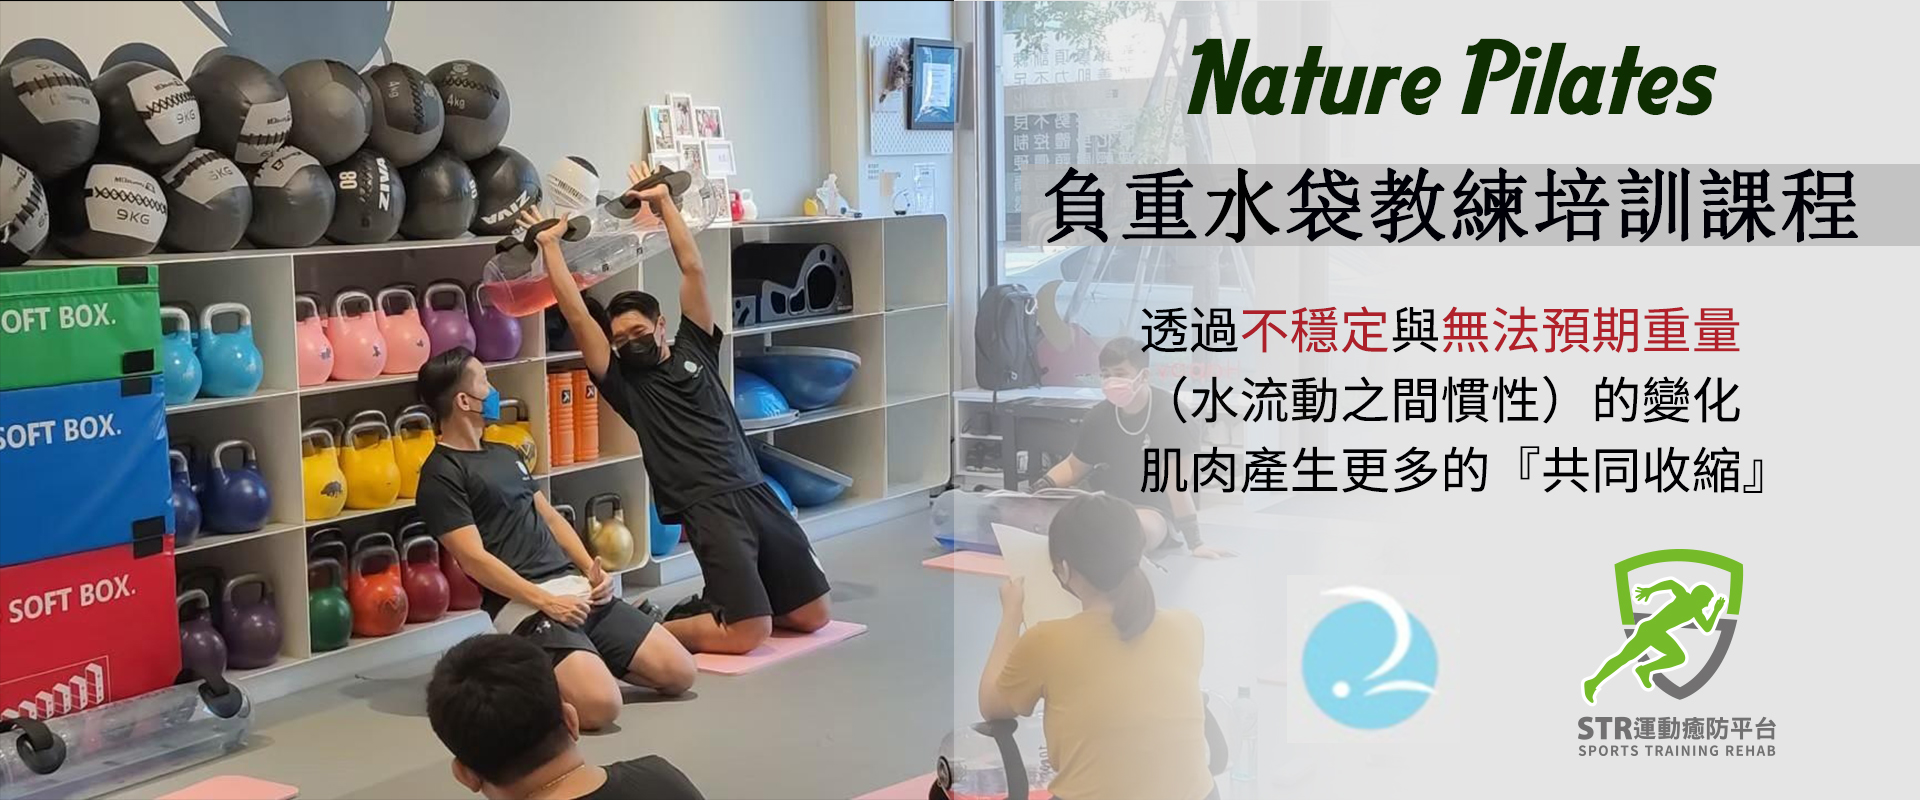 【2022】【Nature Pilates負重水袋教練培訓課程】5/29(台北)